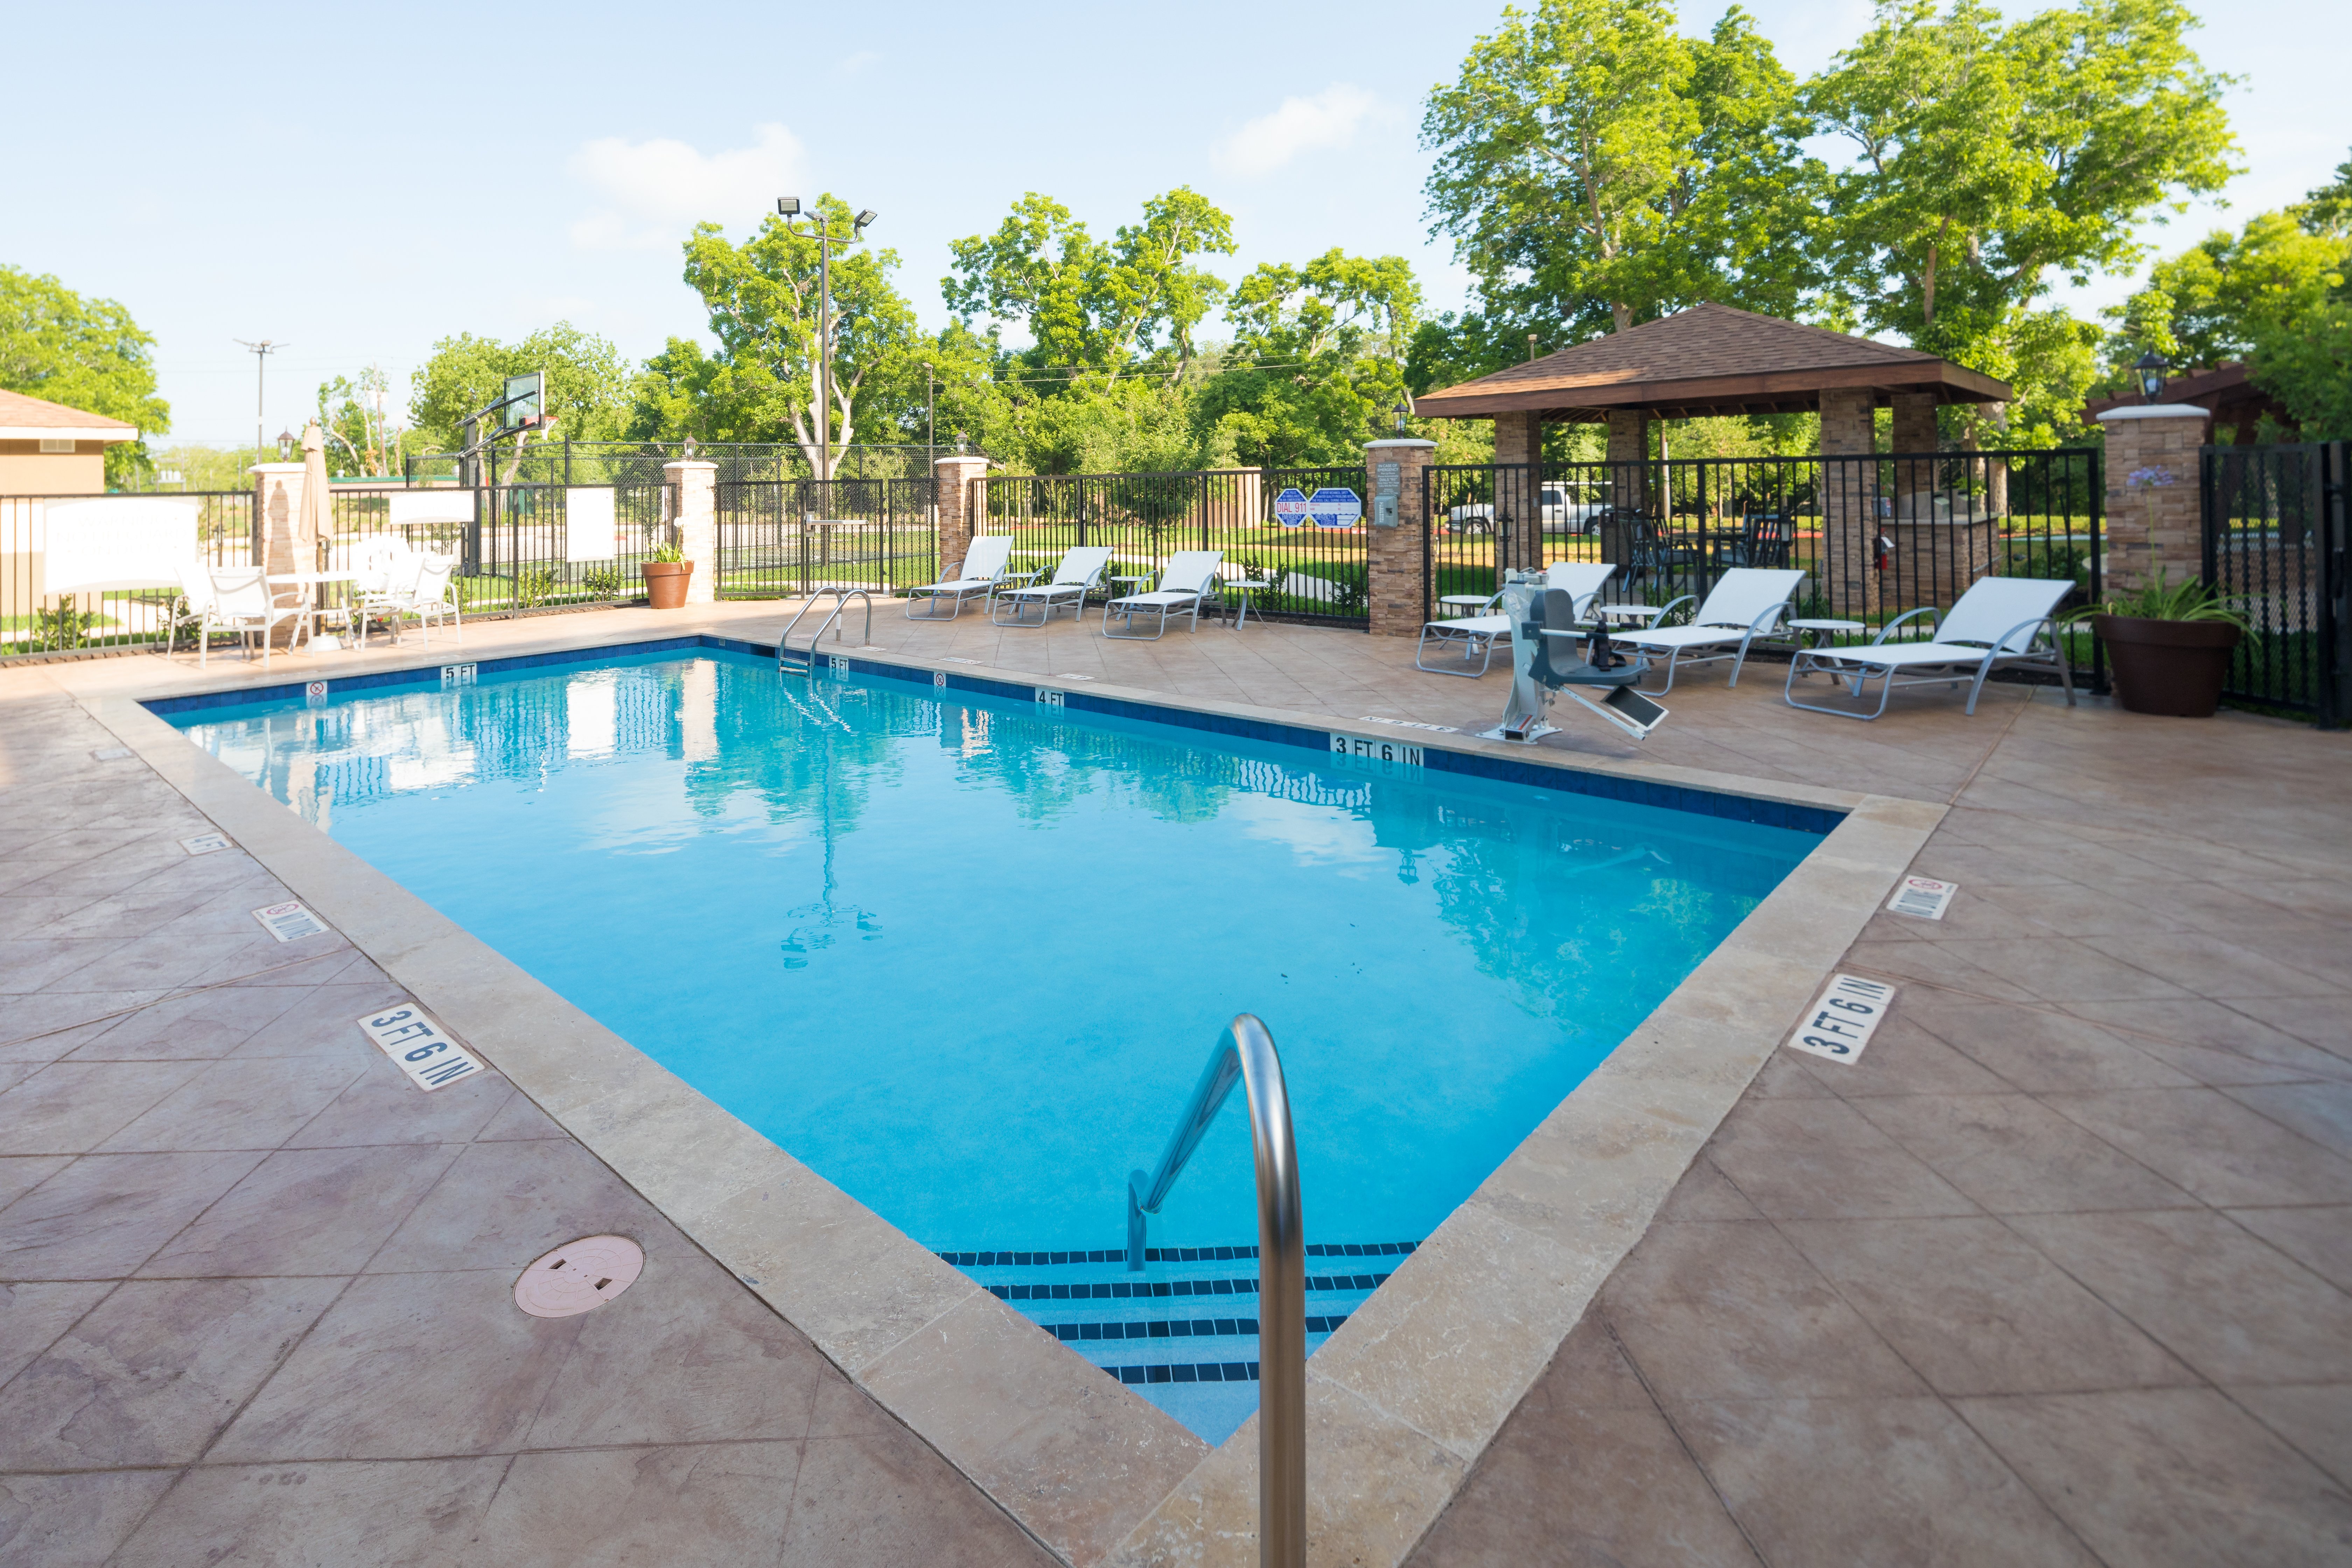 Enjoy a refreshing dip in the pool!